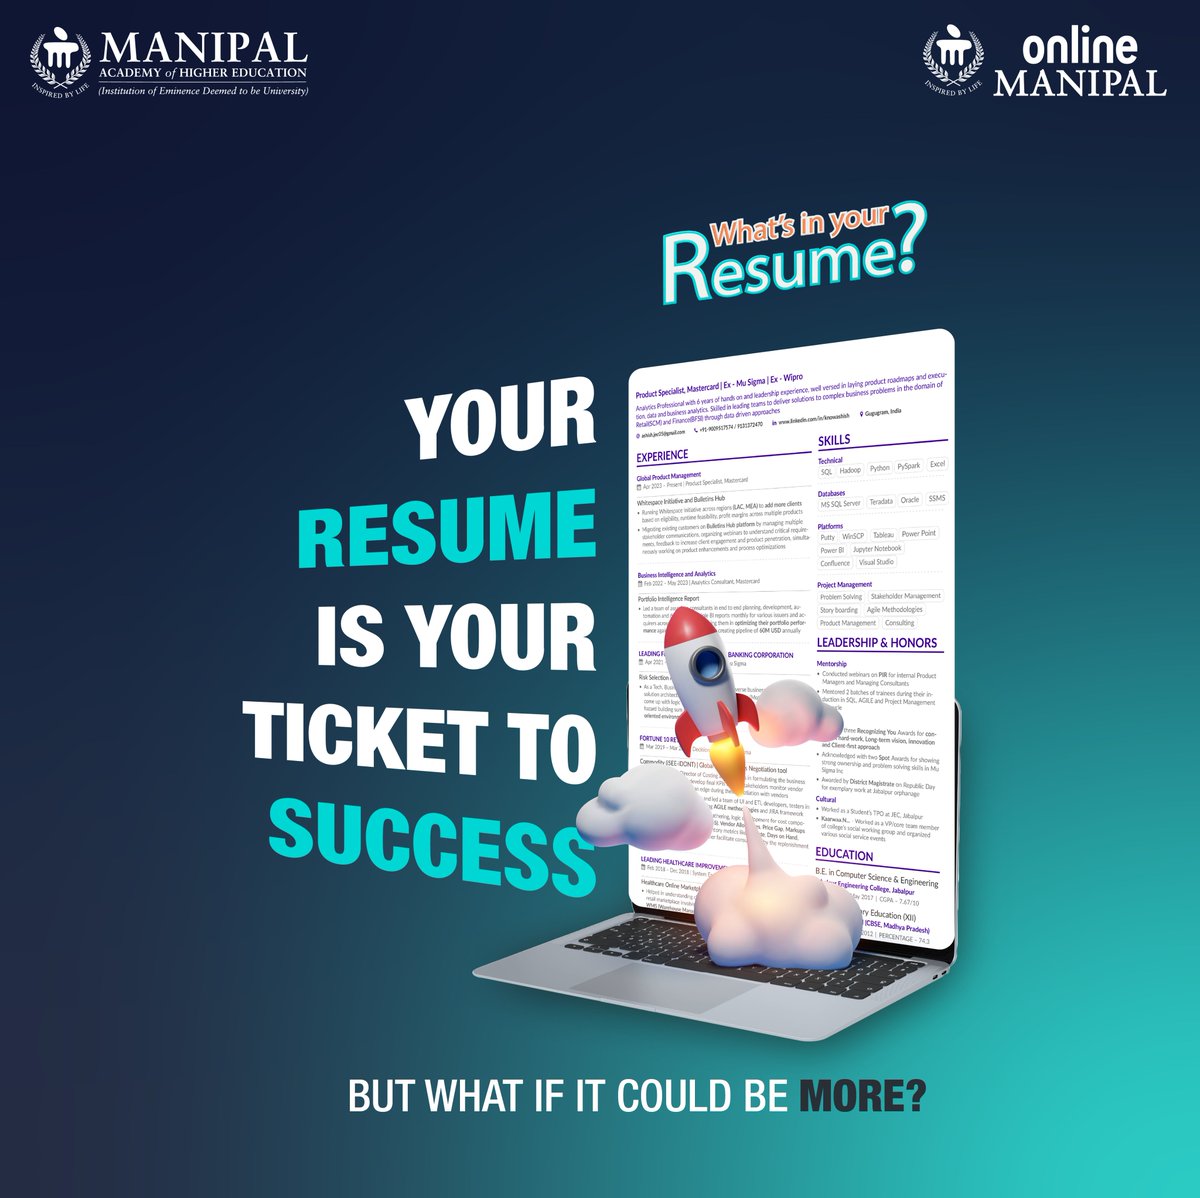 Think outside the resume?

#WhatIsInYourResume #MAHE #CareerProgress #Resume #CareerGrowth #Skillset #StayTuned #Appraisal #OnlineDegrees #StayTuned #OnlineManipal